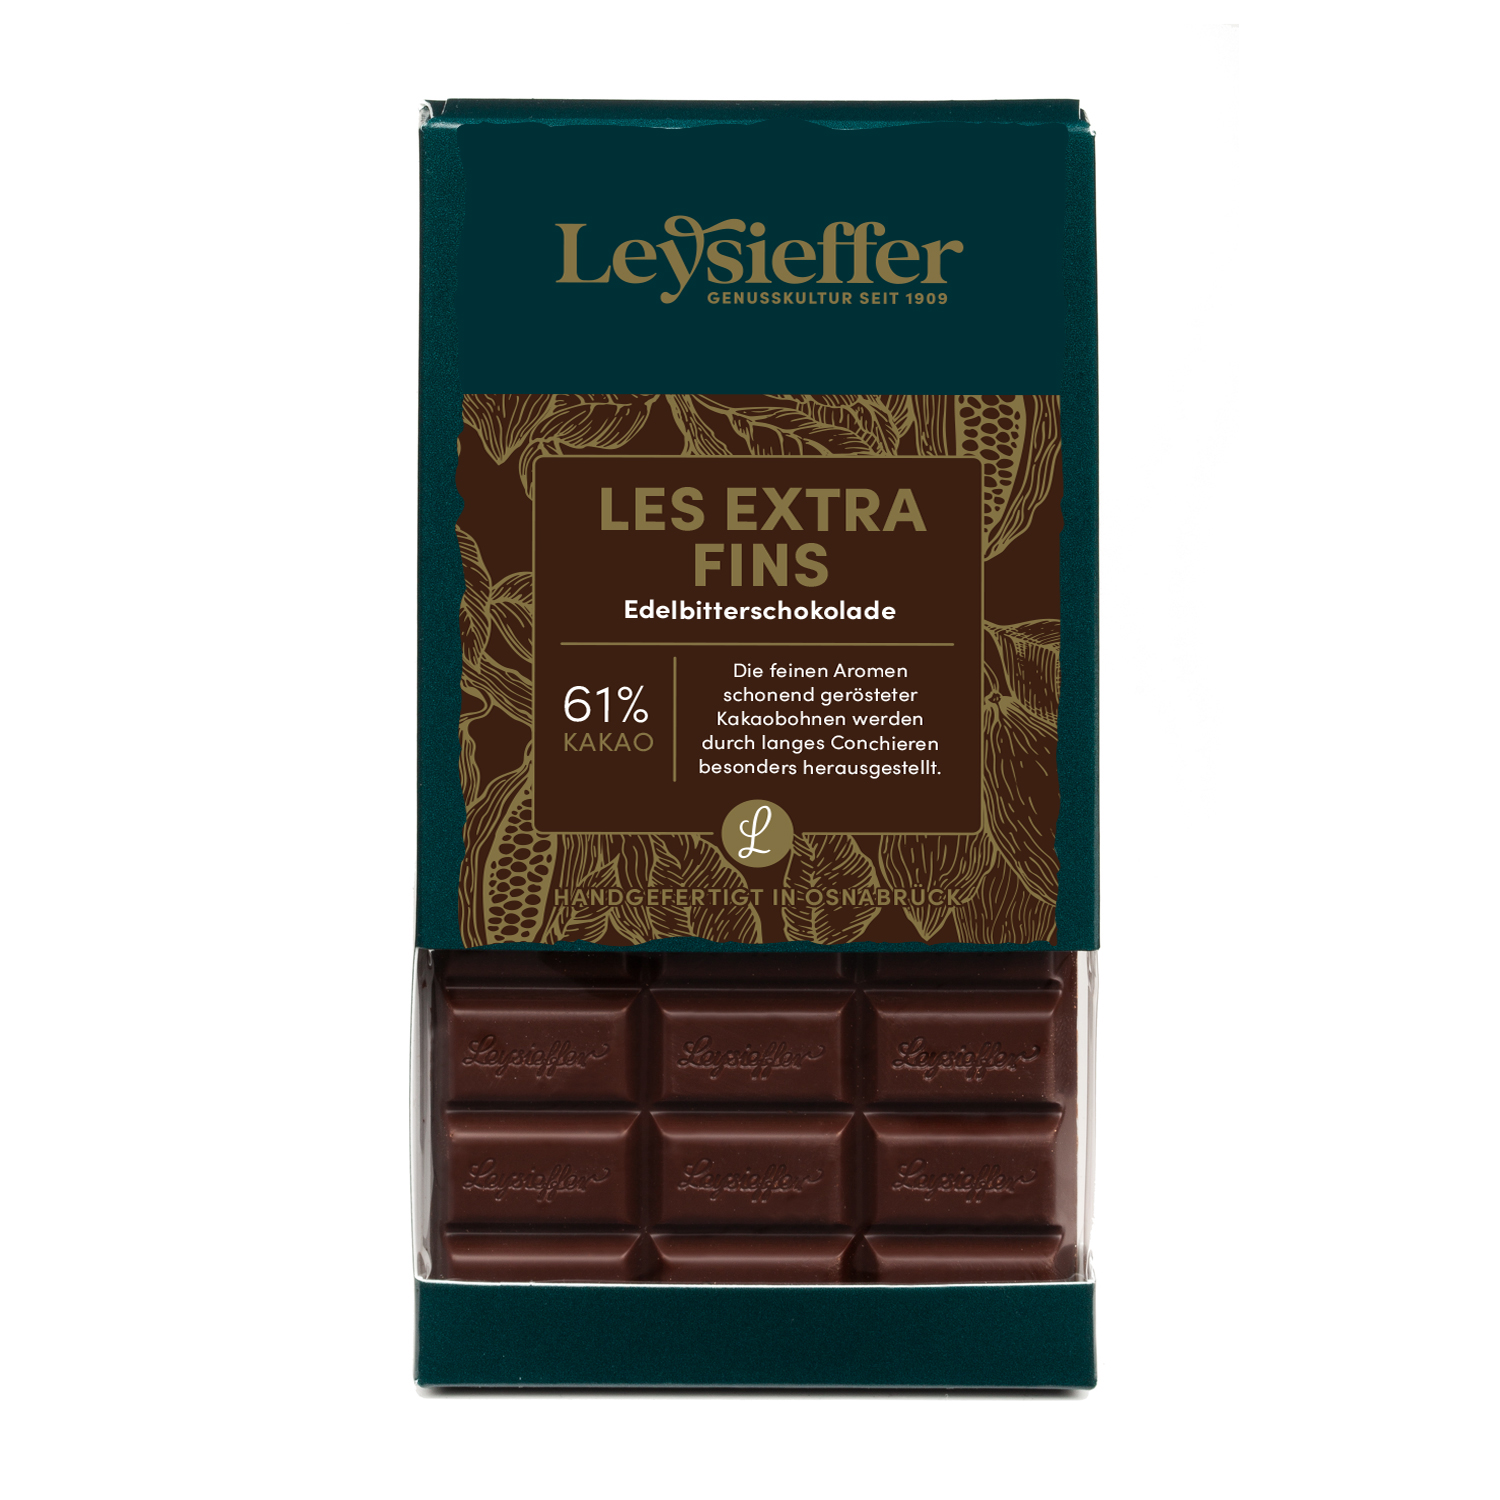 Edelbitter-Schokolade "Les extra Fins"